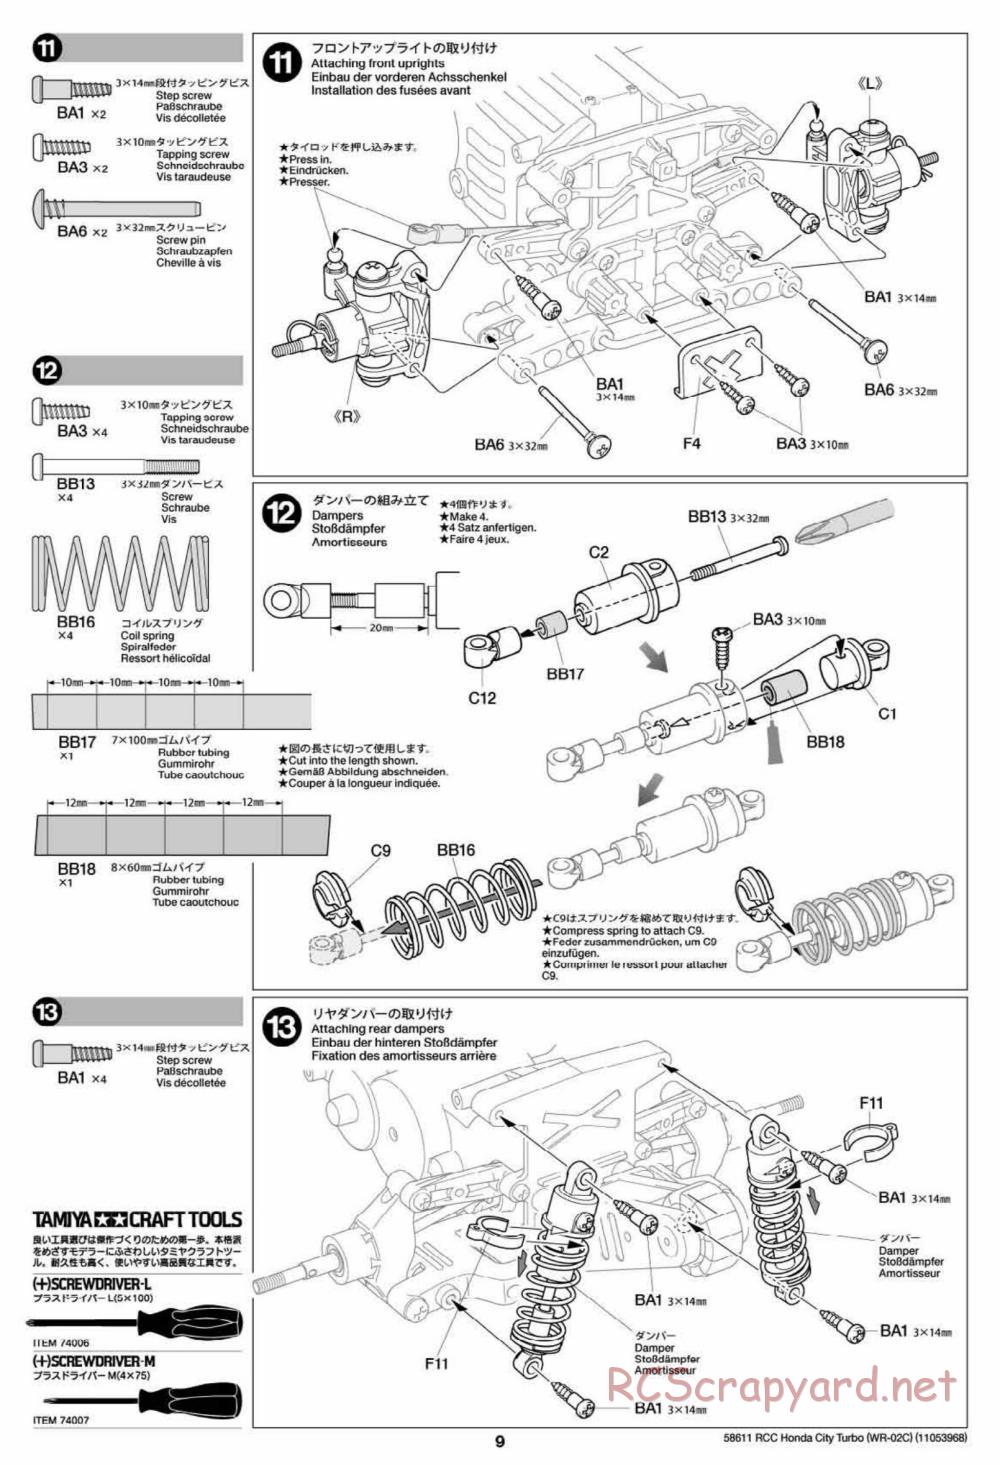 Tamiya - WR-02C Chassis - Manual - Page 9